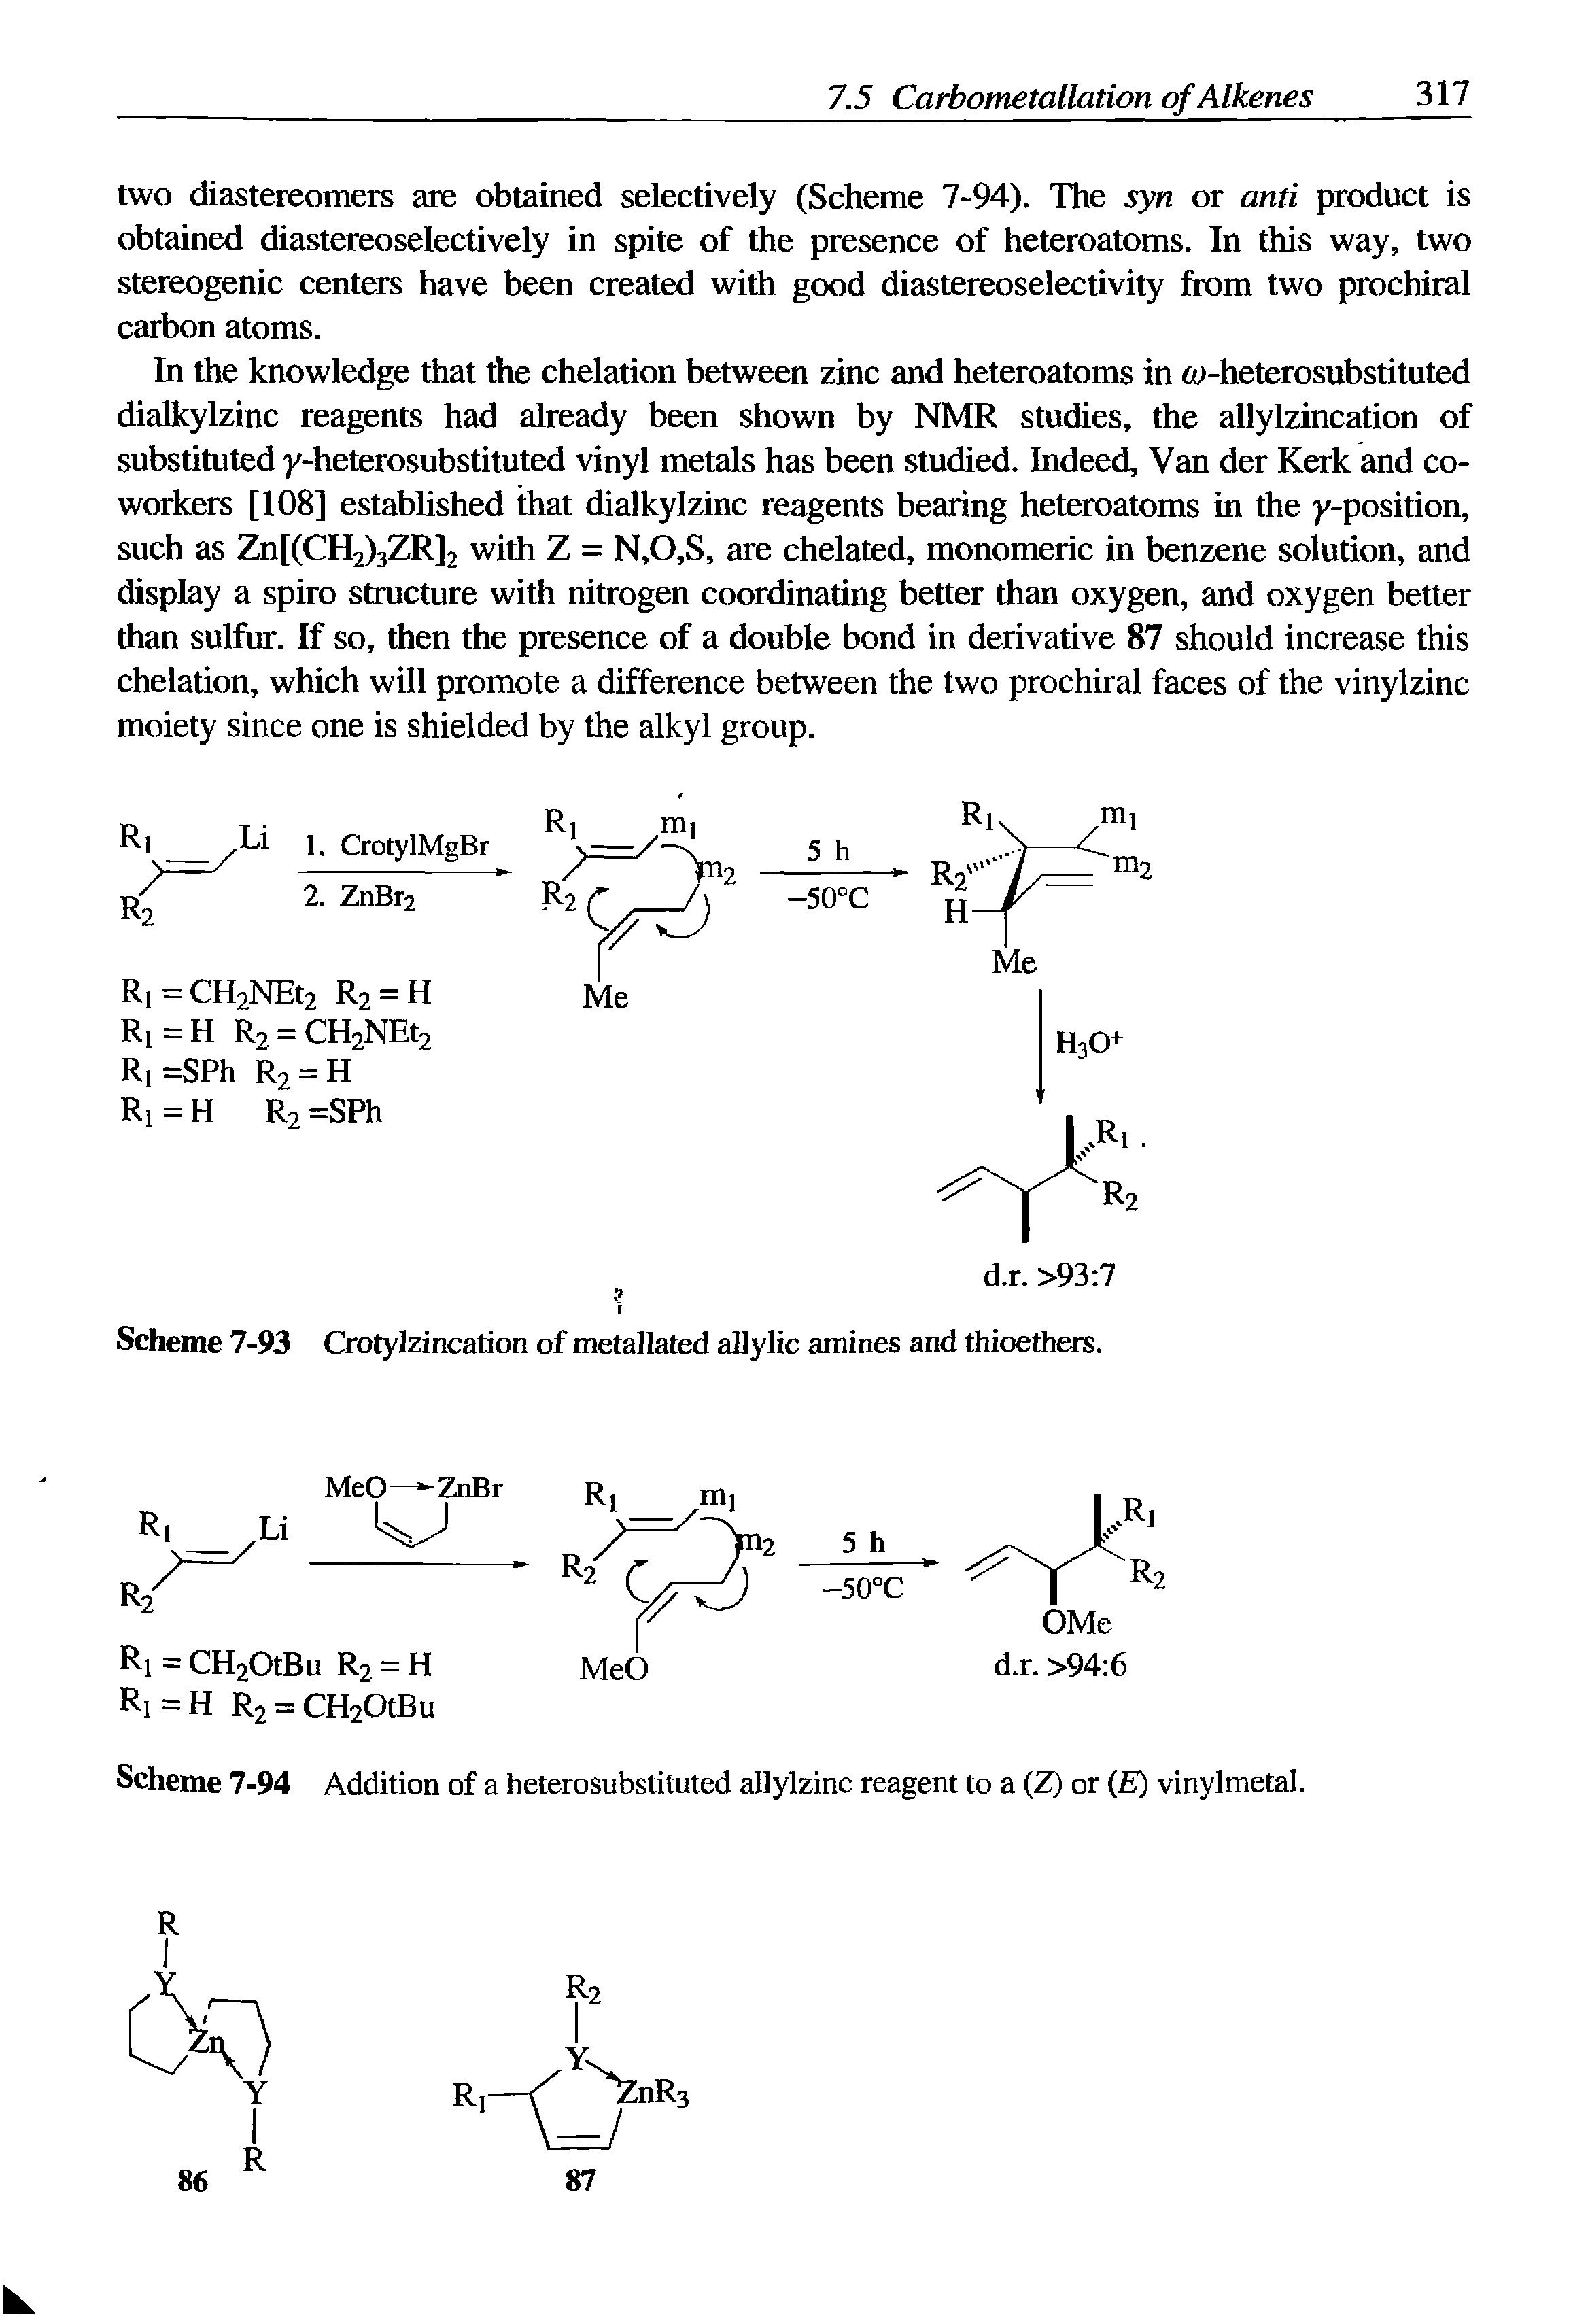 Scheme 7-94 Addition of a heterosubstituted allylzinc reagent to a (Z) or ( ) vinylmetal.